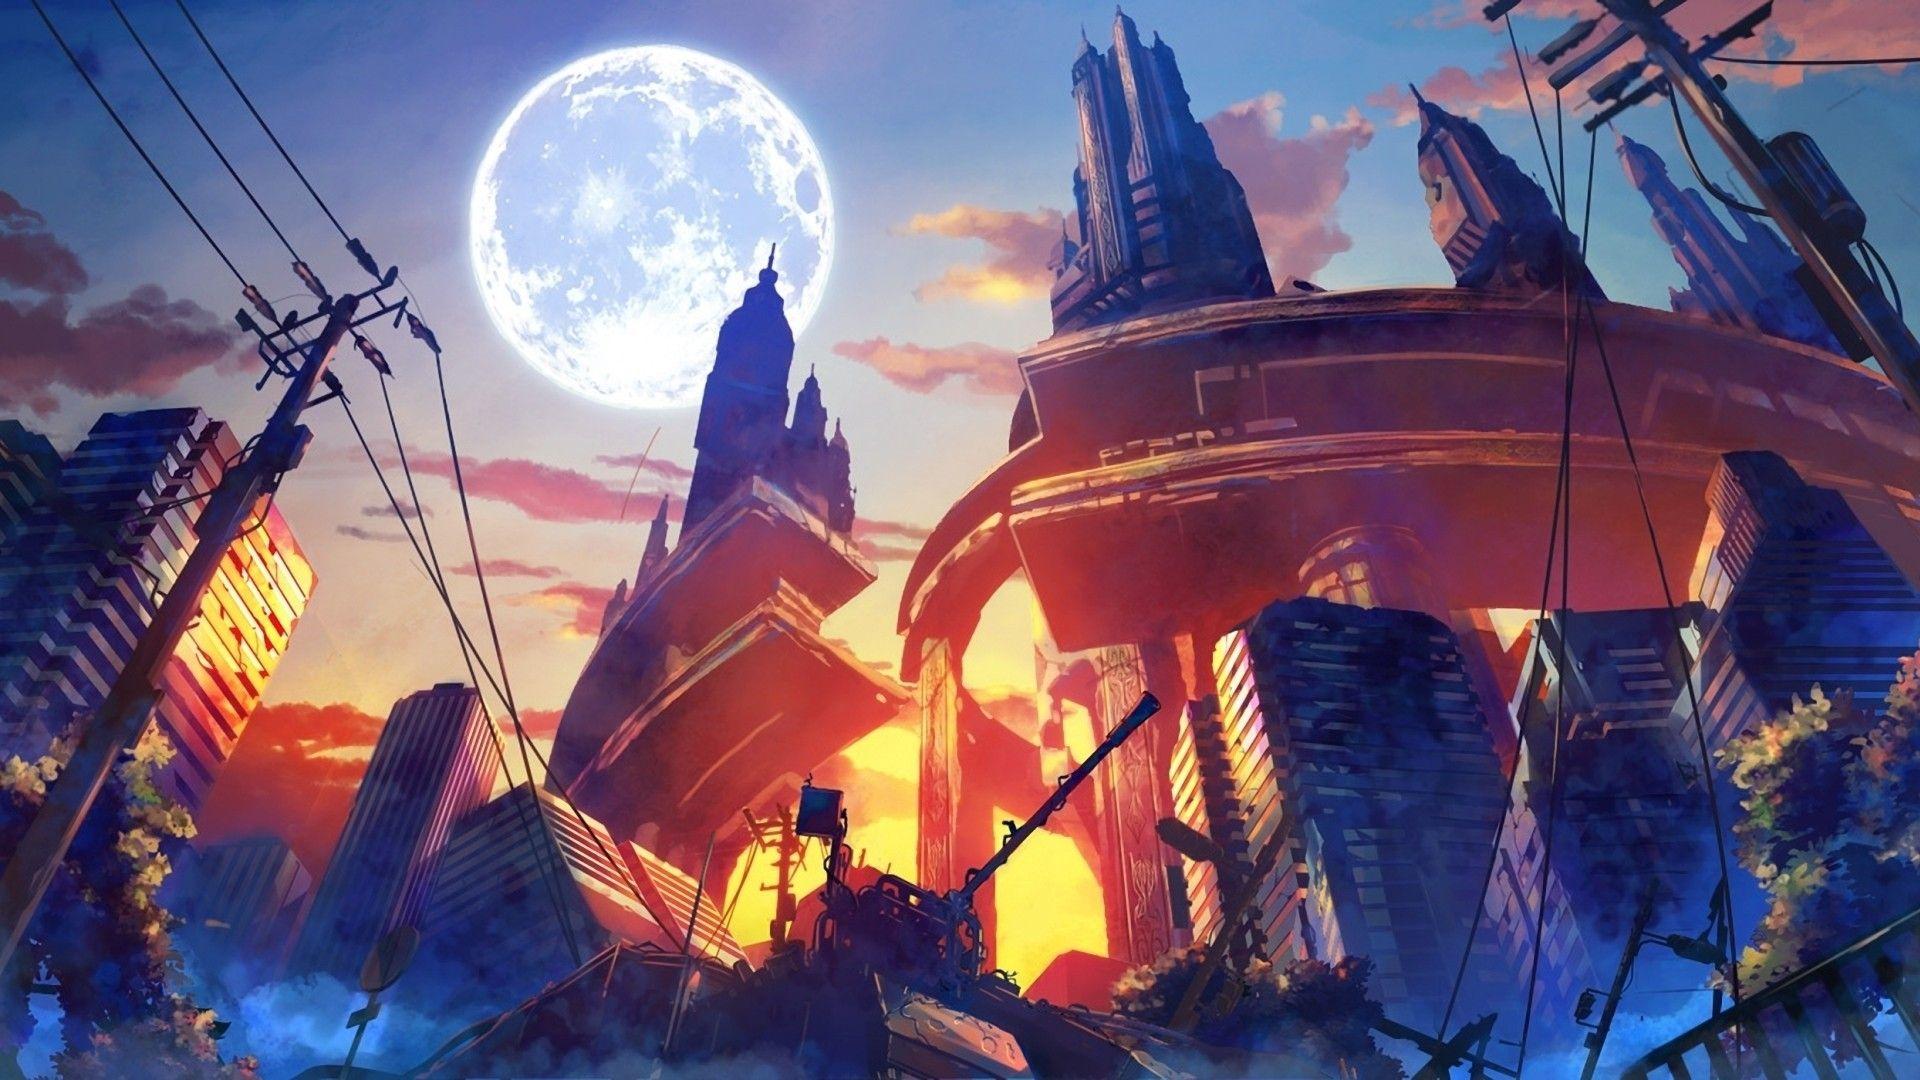 Moon, #fantasy art, #artwork, #anime, #city, #destruction